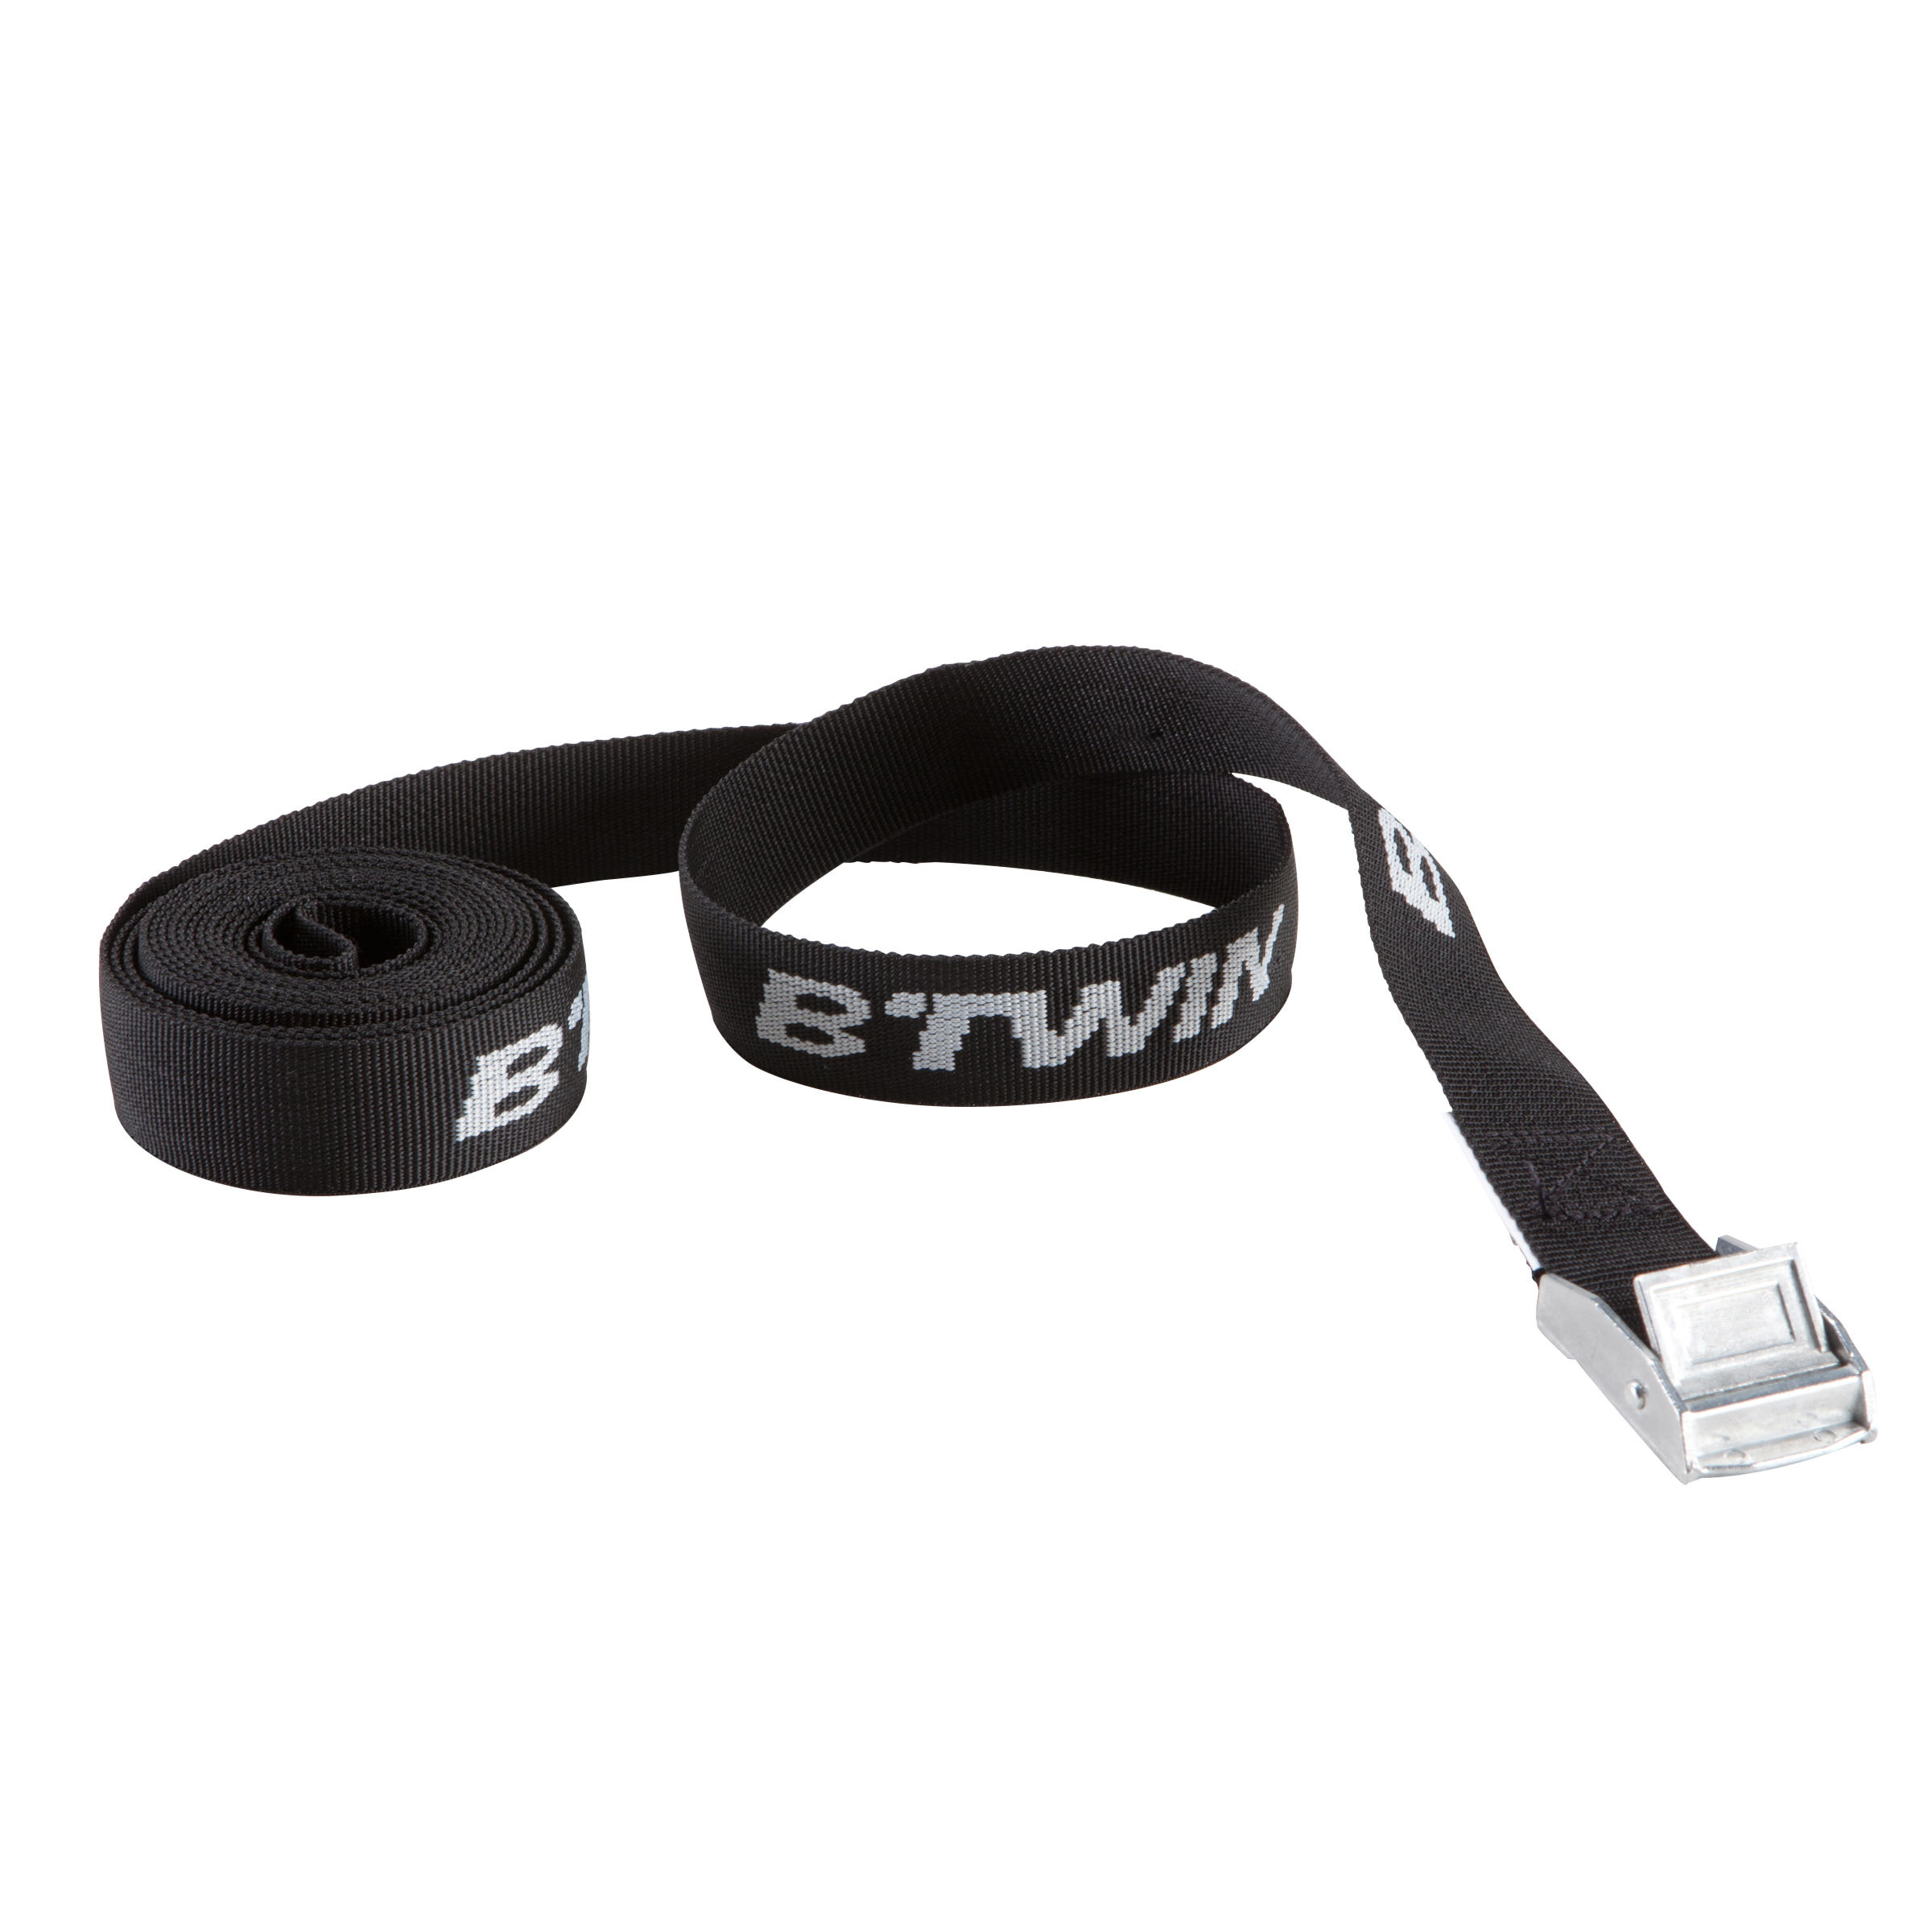 Buy Tightening Strap Kit 2 x 3 m - Black Online